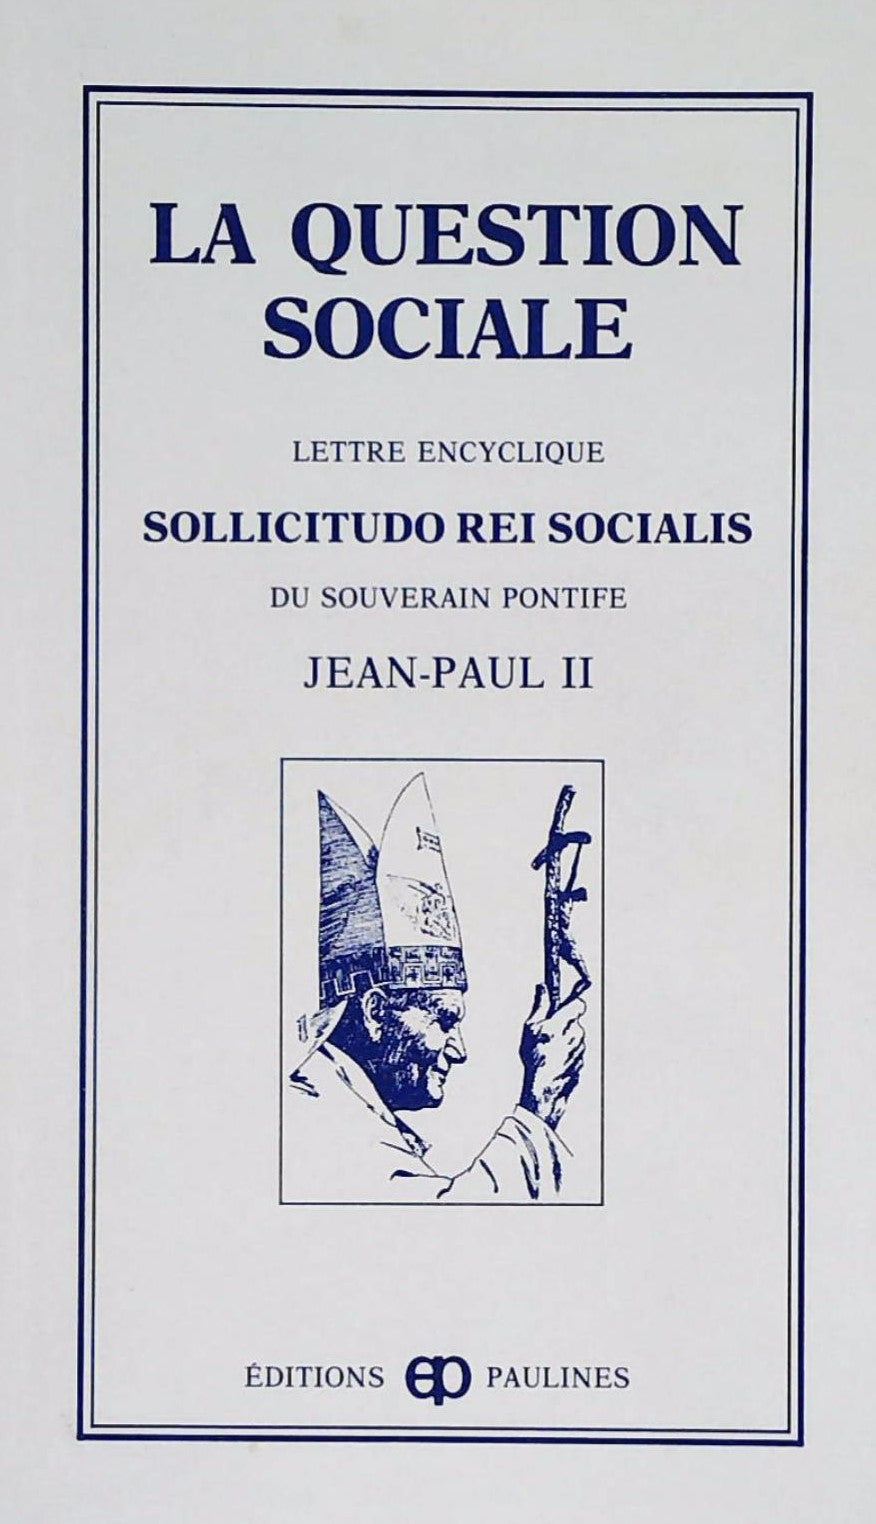 Livre ISBN 289039185X La question sociale - Lettre encyclique du souverain pontife Jean-Paul II (Jean-Paul II)